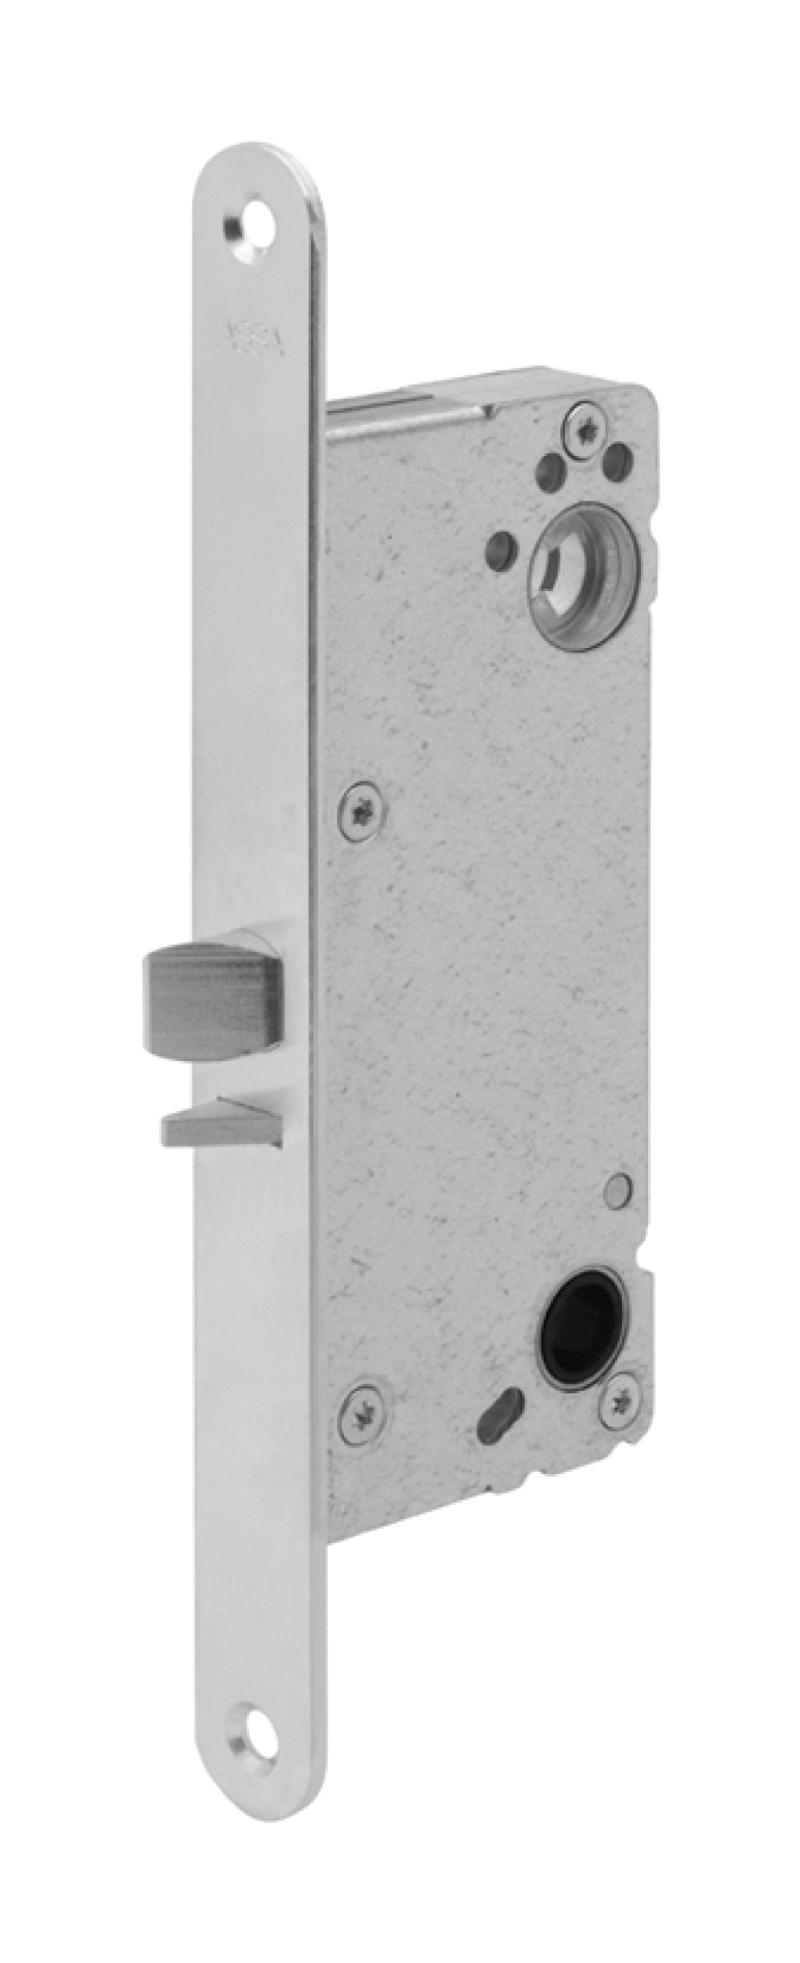 Assa lock box Connect 232 reversible